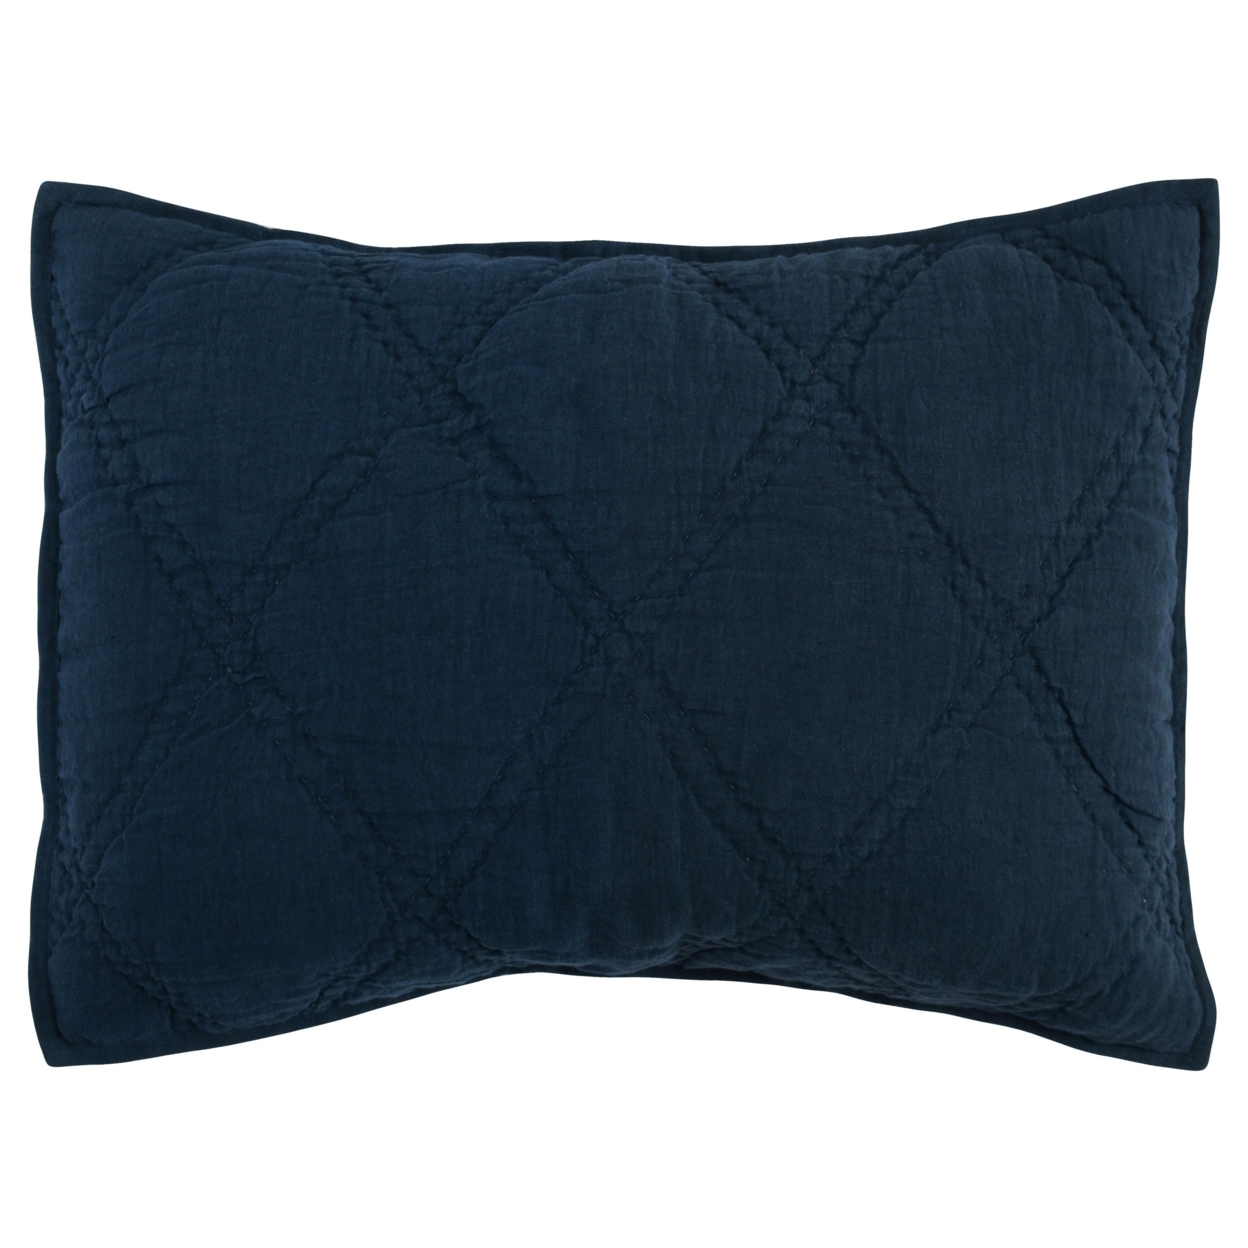 Hara 26 Inch Hand Quilted Standard Pillow Sham, Polyester Fill, Dark Blue- Saltoro Sherpi